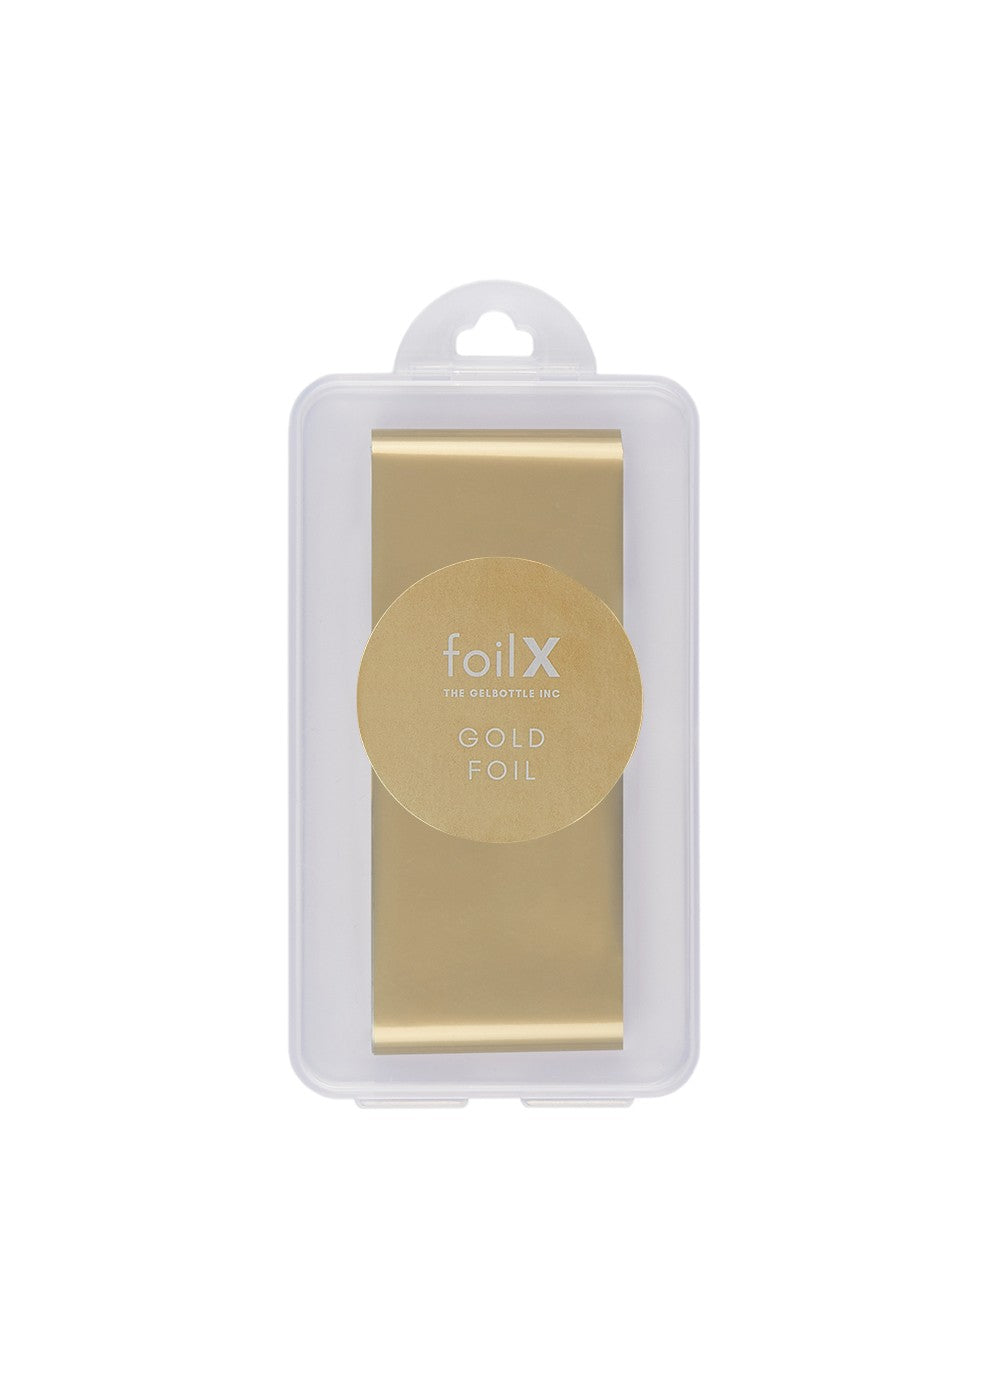 The GelBottle FoilX Gold